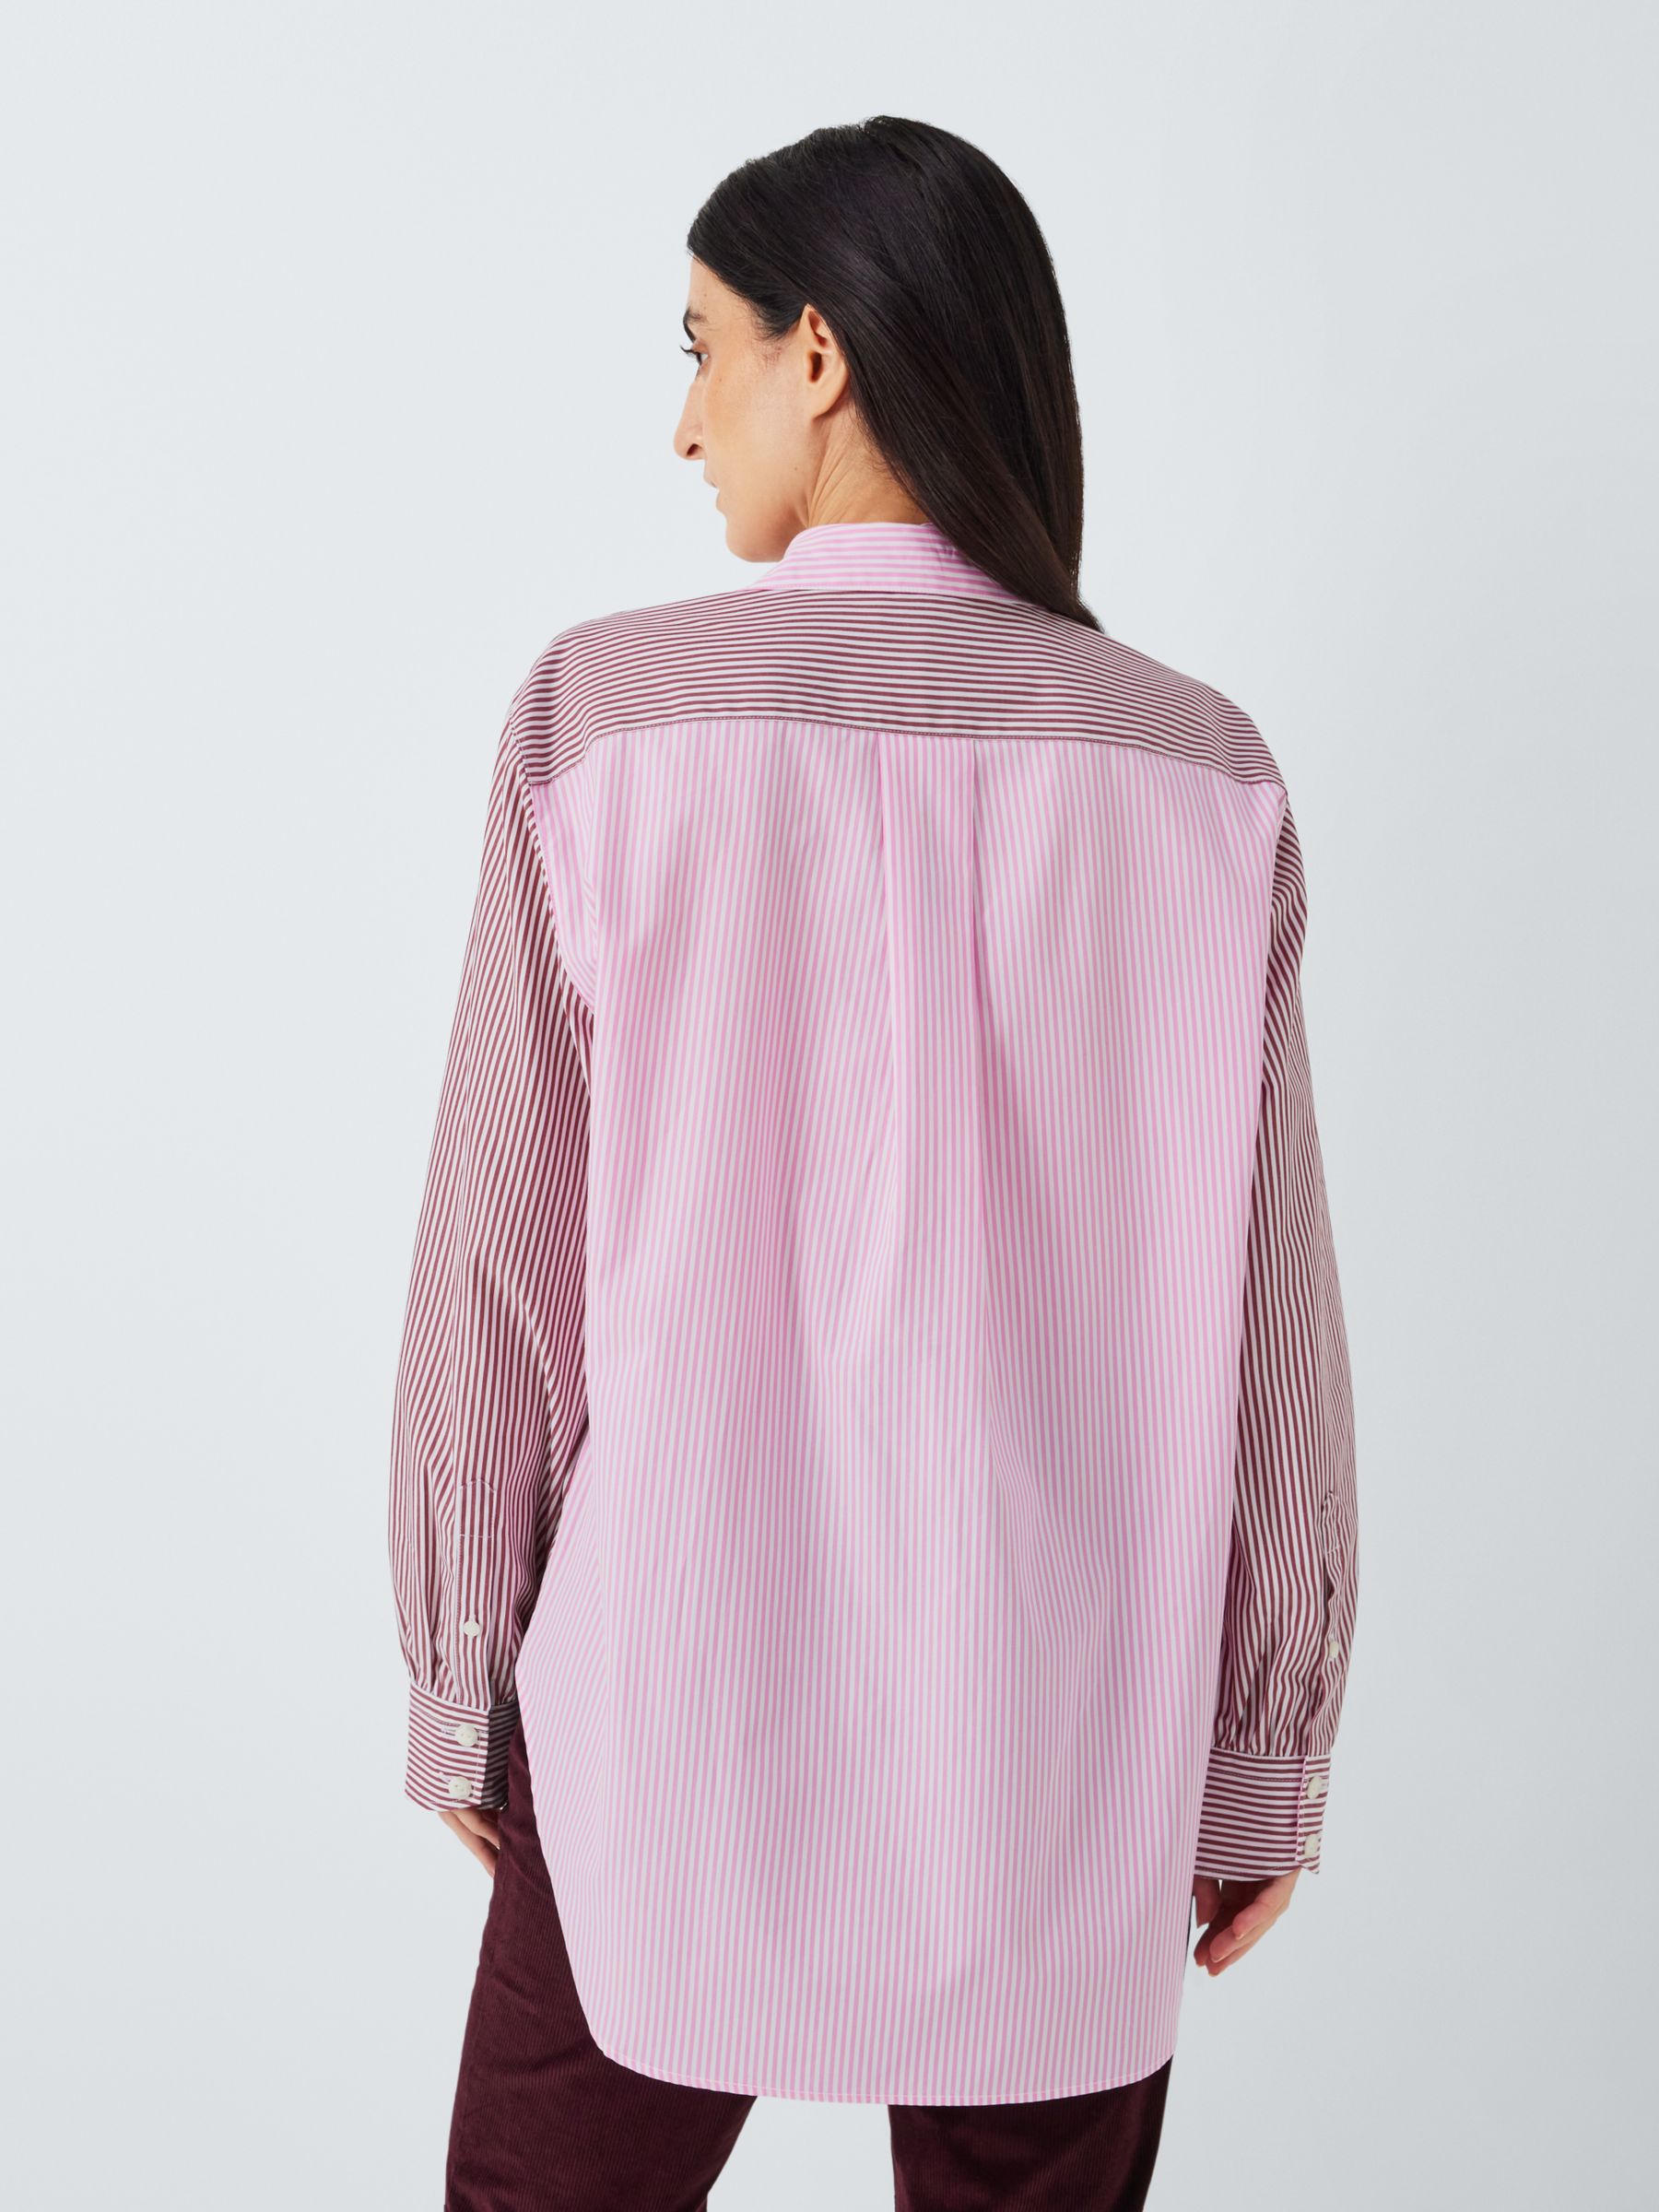 rag & bone Maxine Colour Block Stripe Shirt, Pink/Multi, L